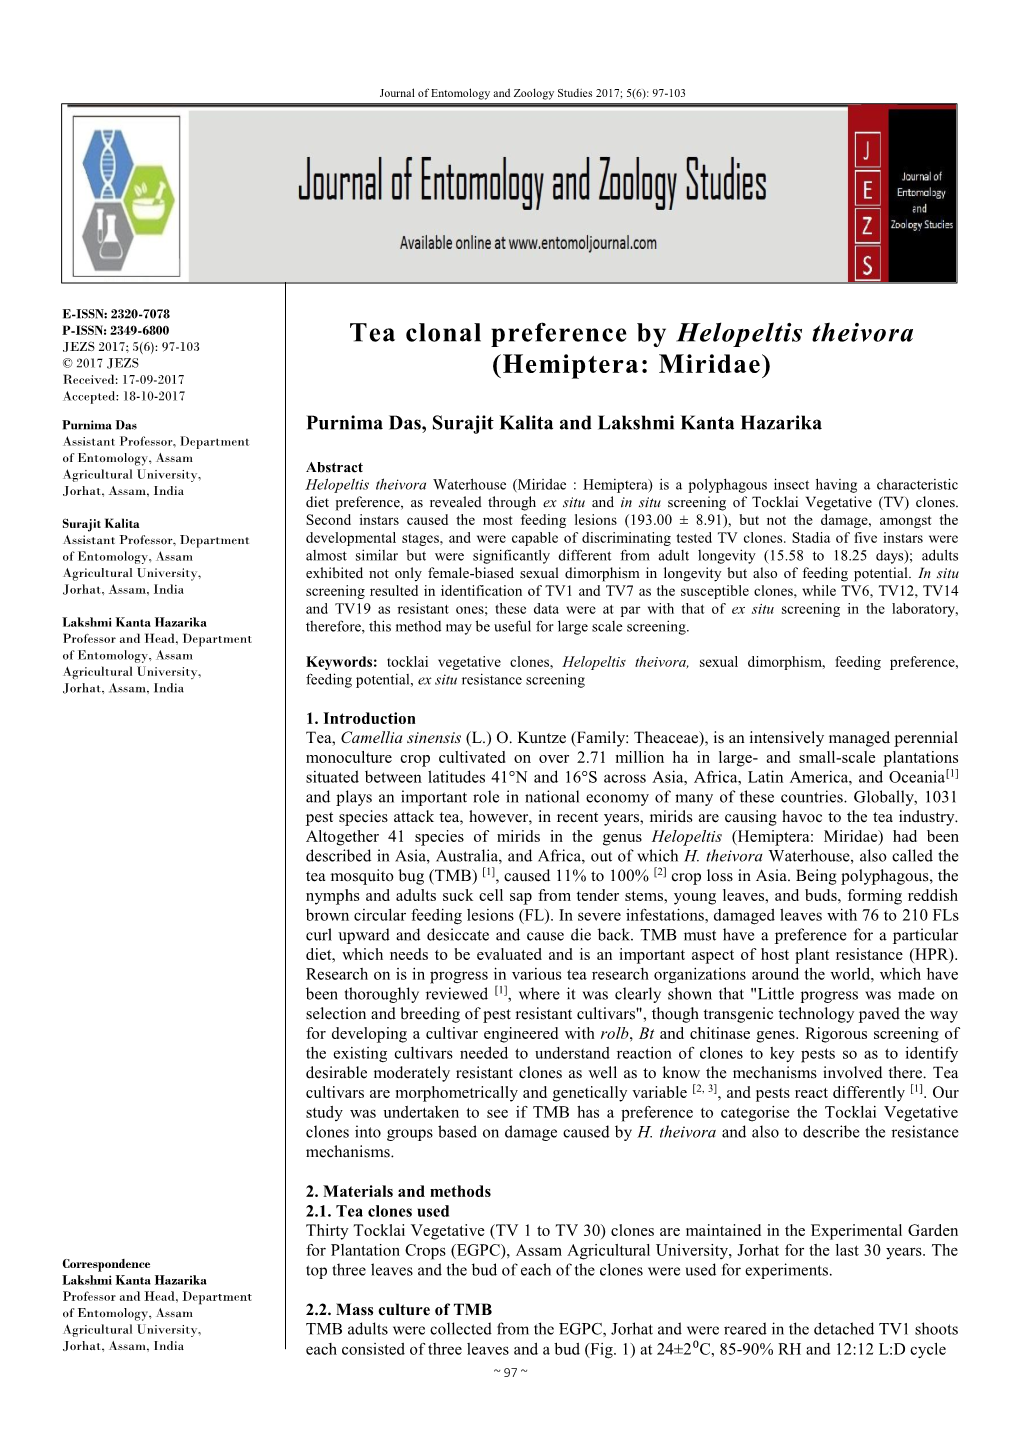 Tea Clonal Preference by Helopeltis Theivora (Hemiptera: Miridae)